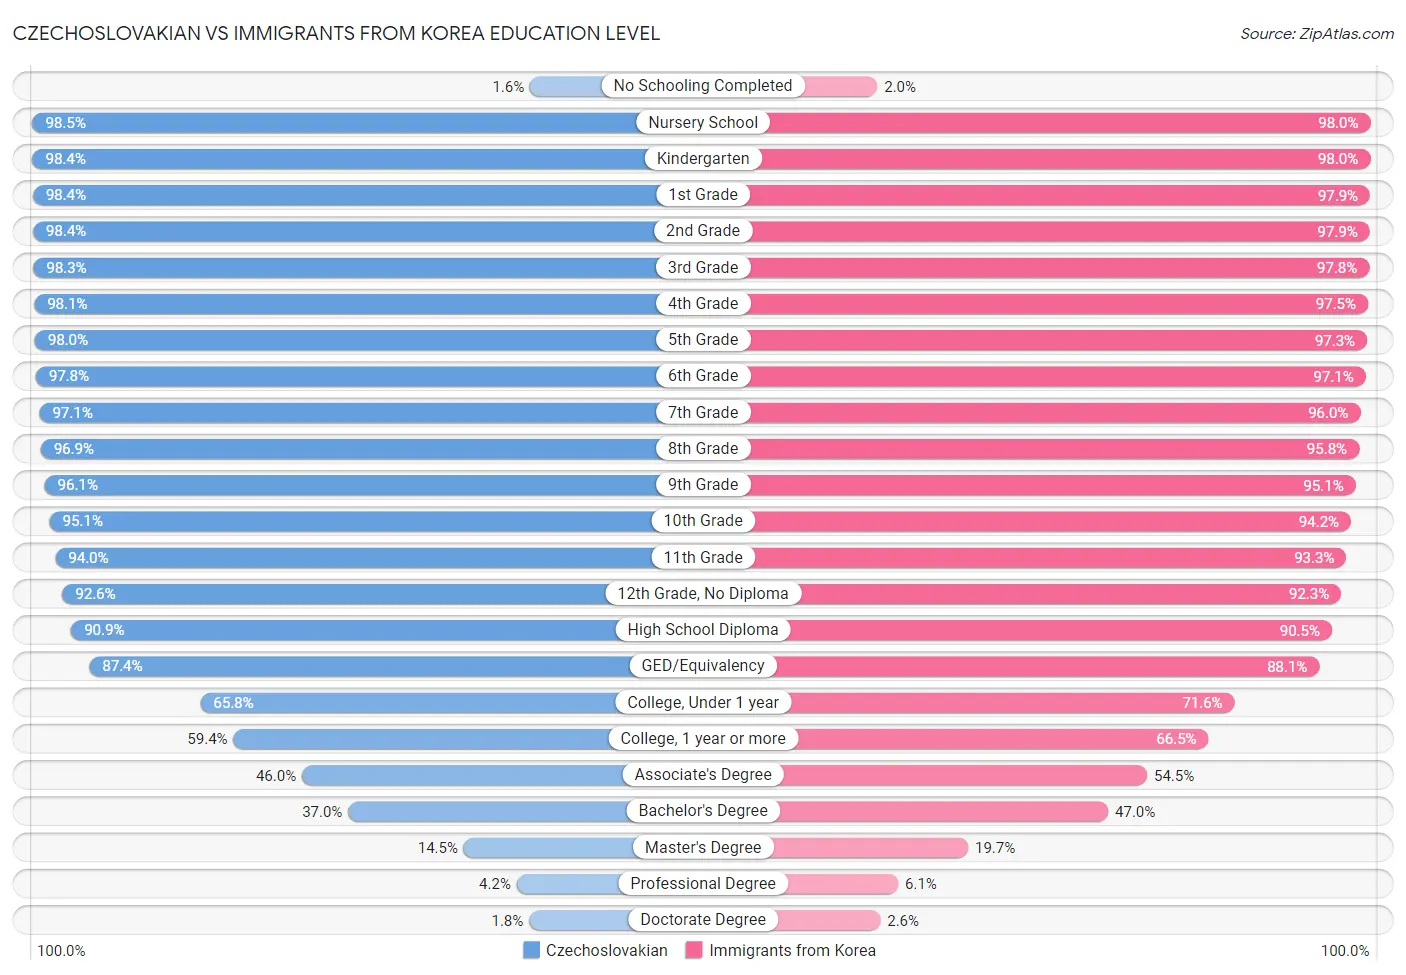 Czechoslovakian vs Immigrants from Korea Education Level